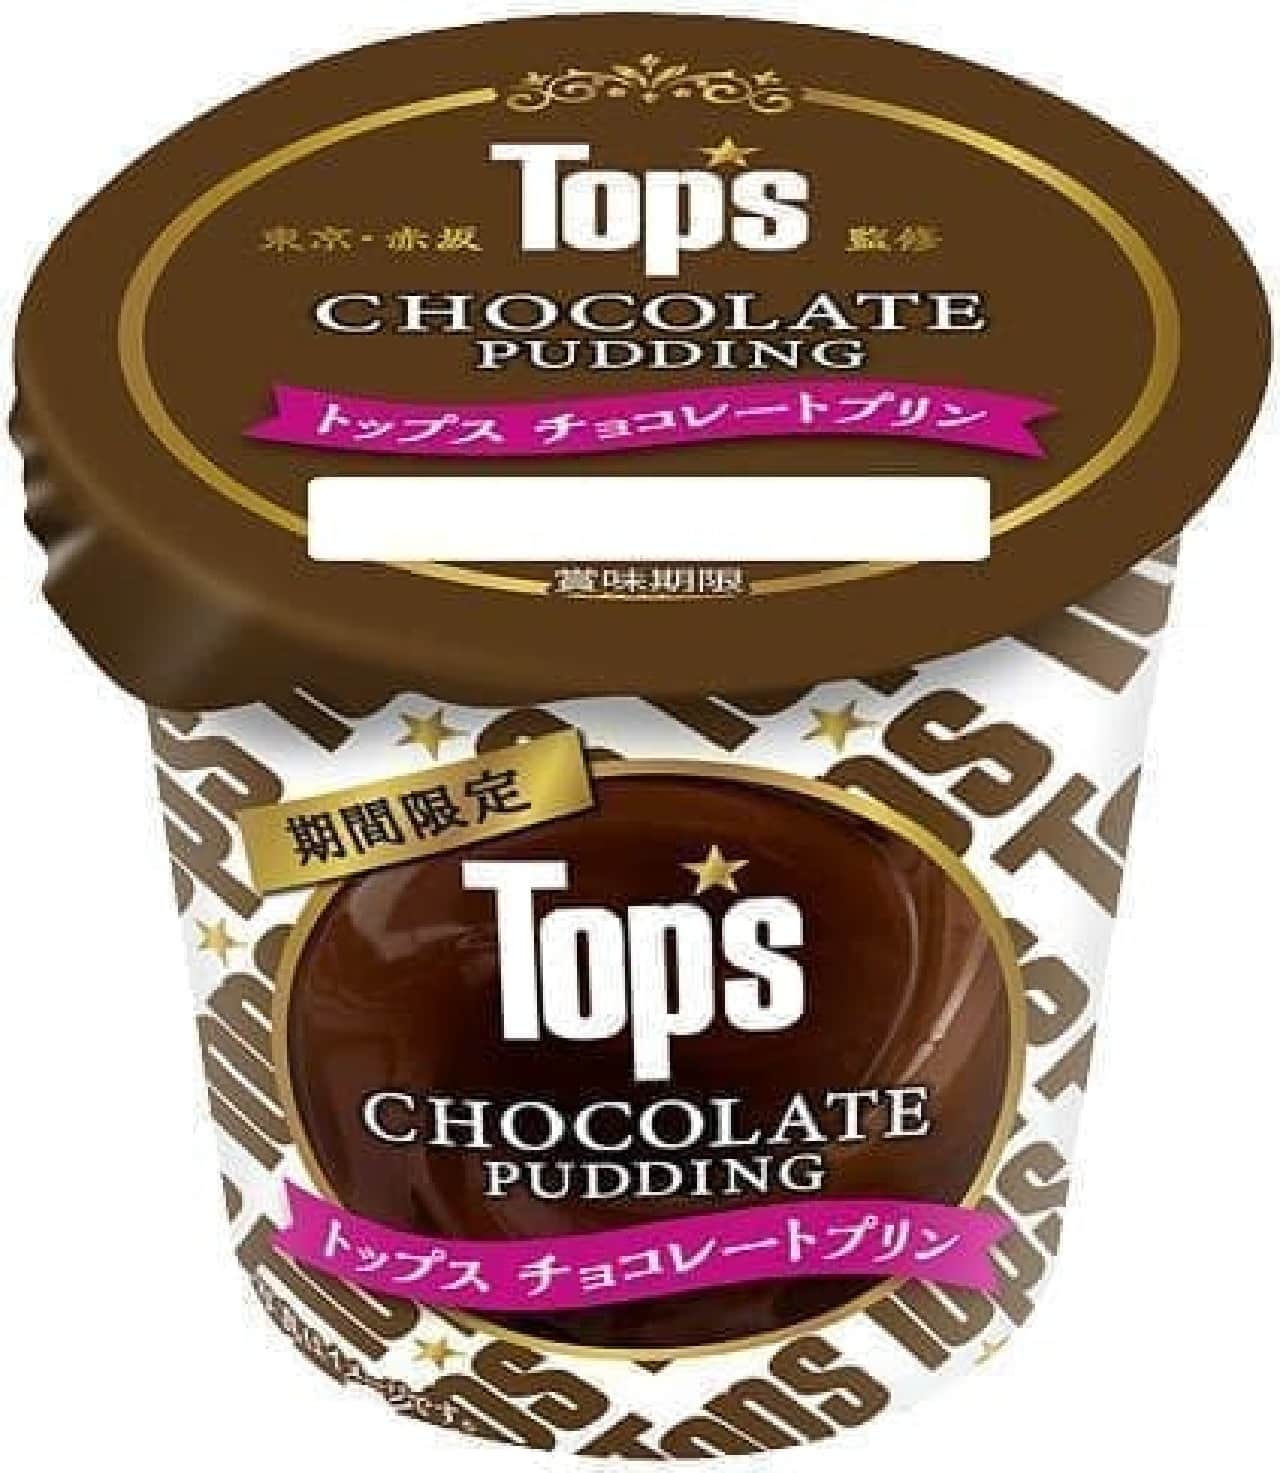 Hokkaido Dairy "Tops Chocolate Pudding"